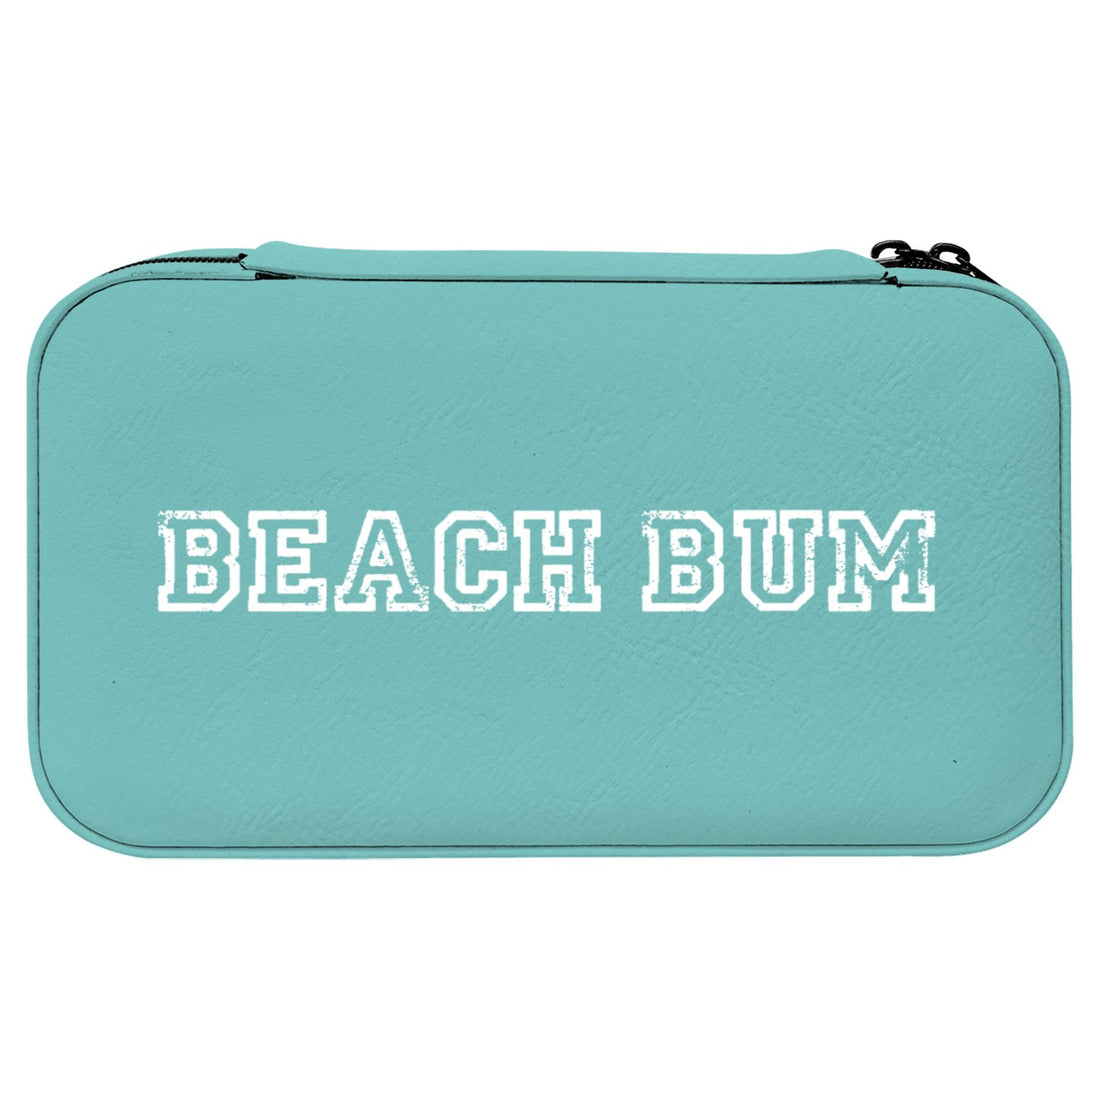 Beach Bum Jewelry Organizer - Positively Sassy - Beach Bum Jewelry Organizer